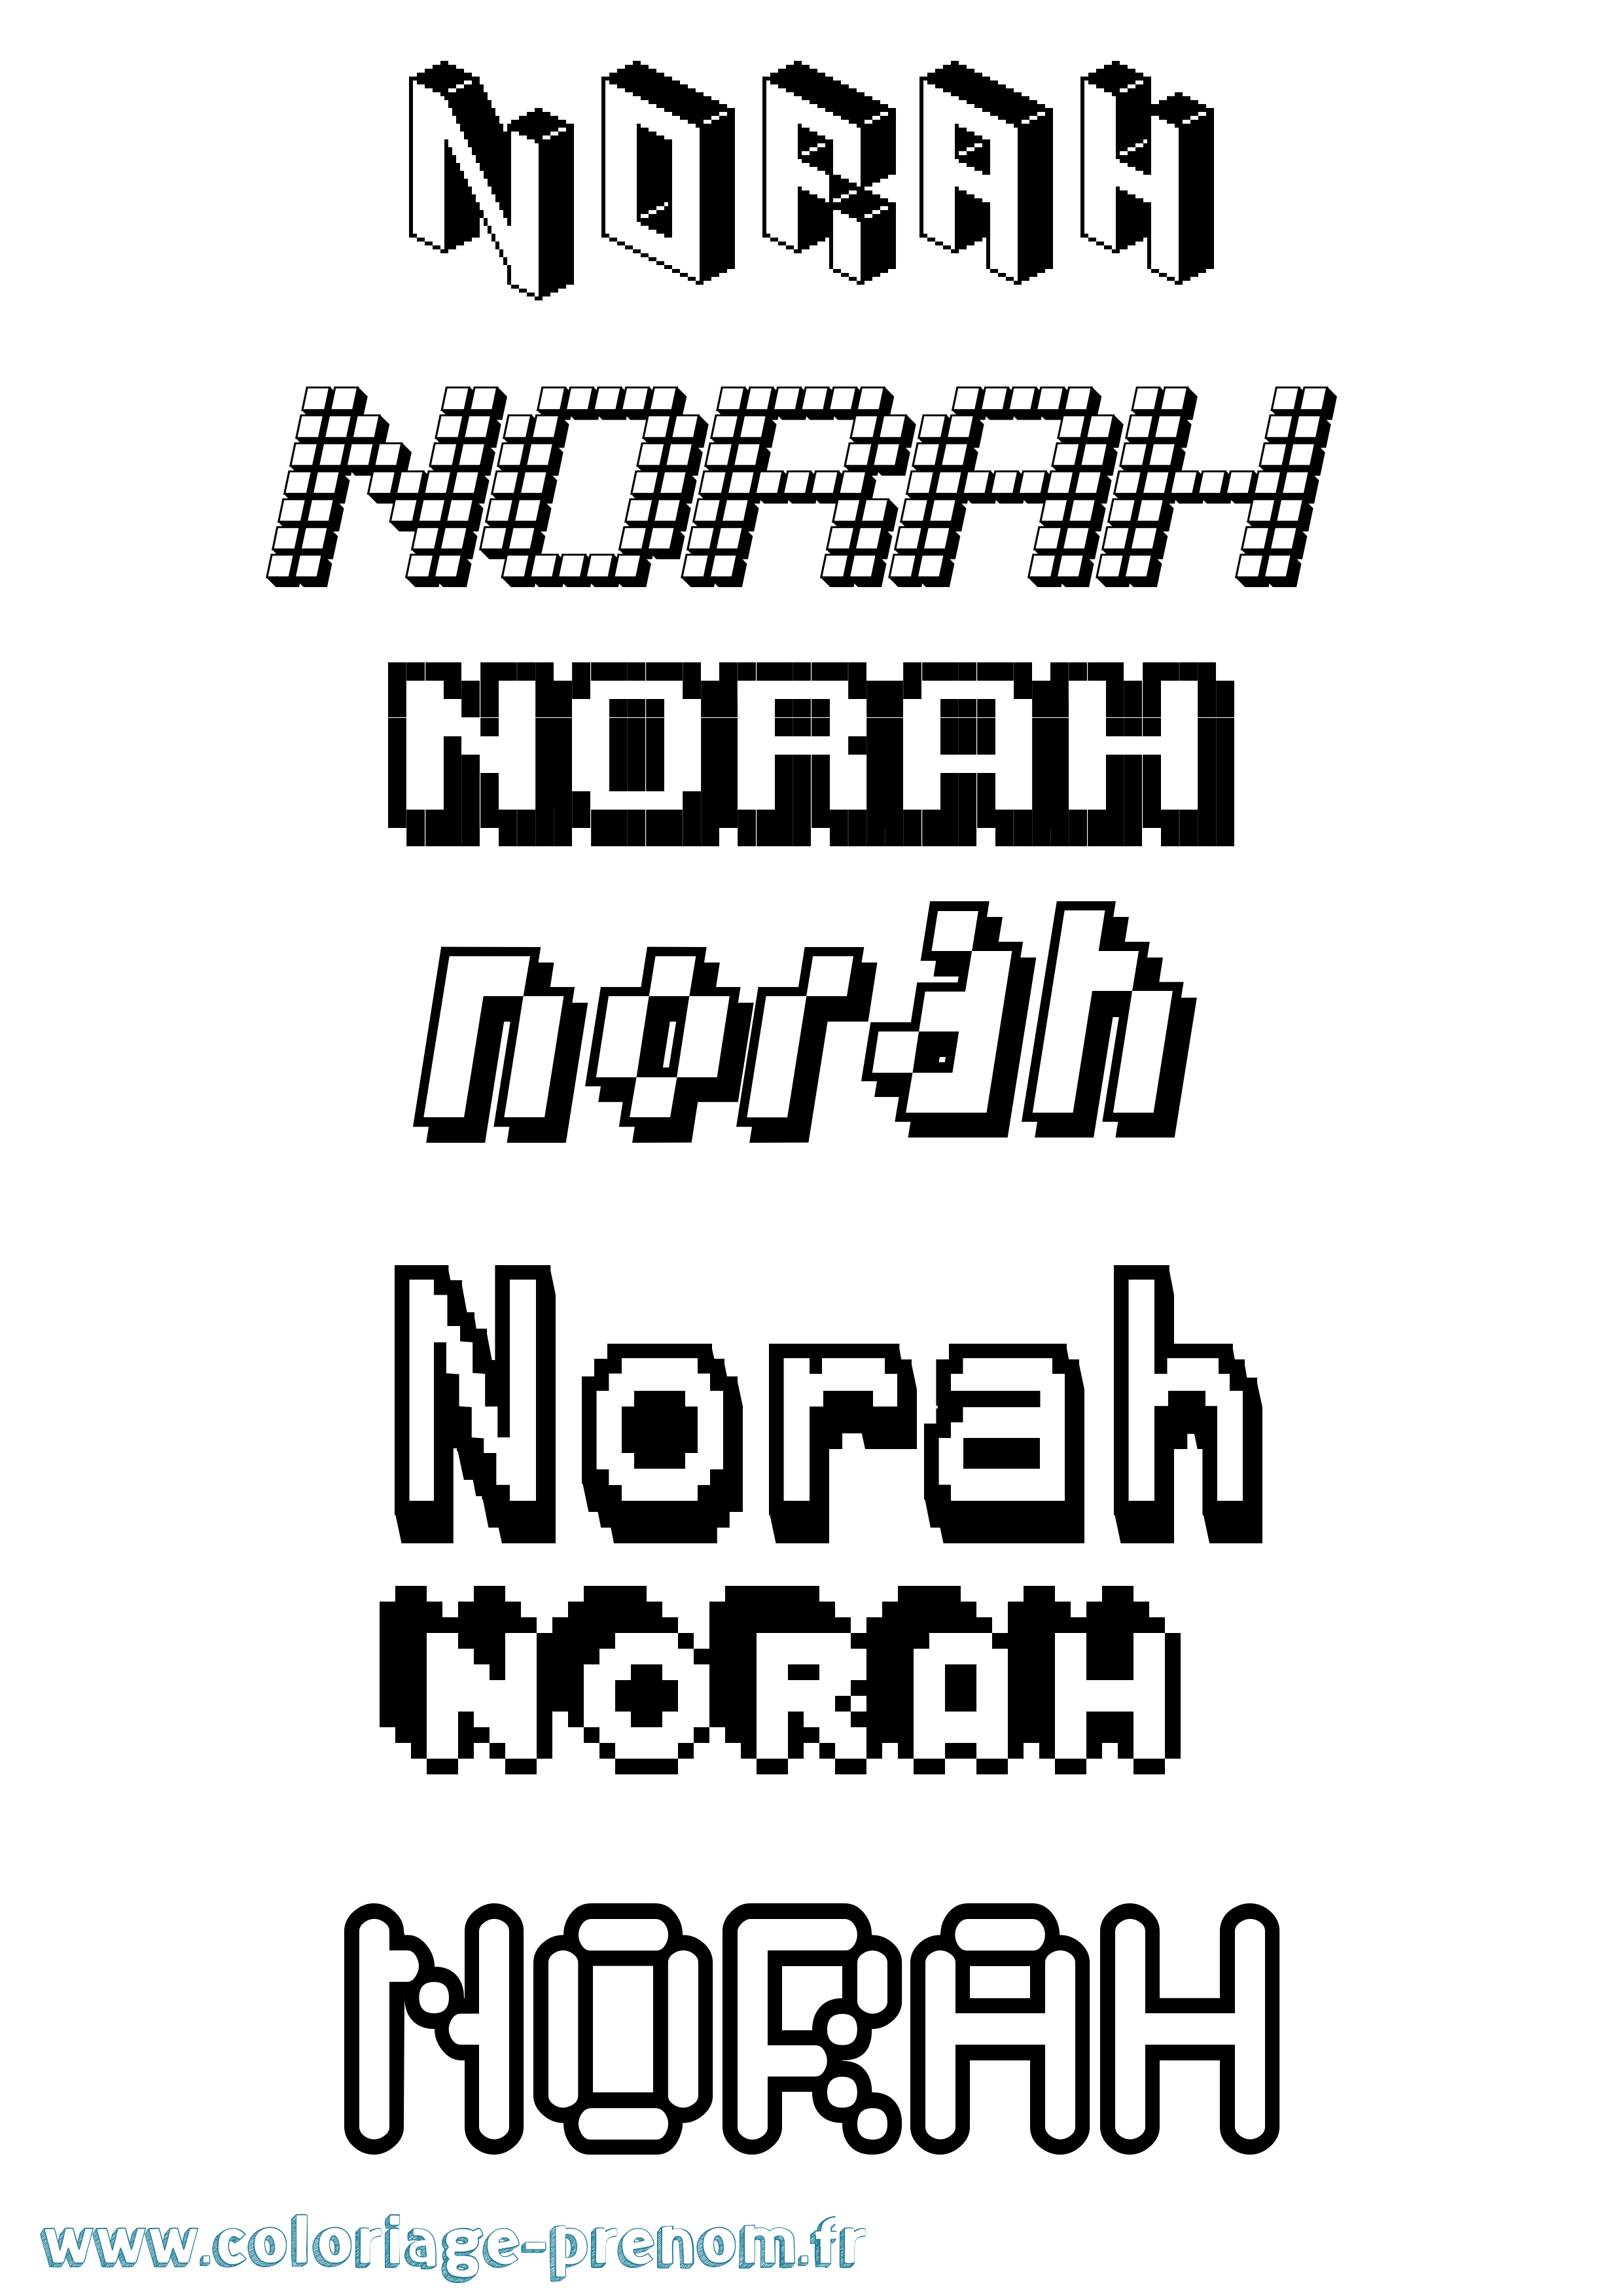 Coloriage prénom Norah